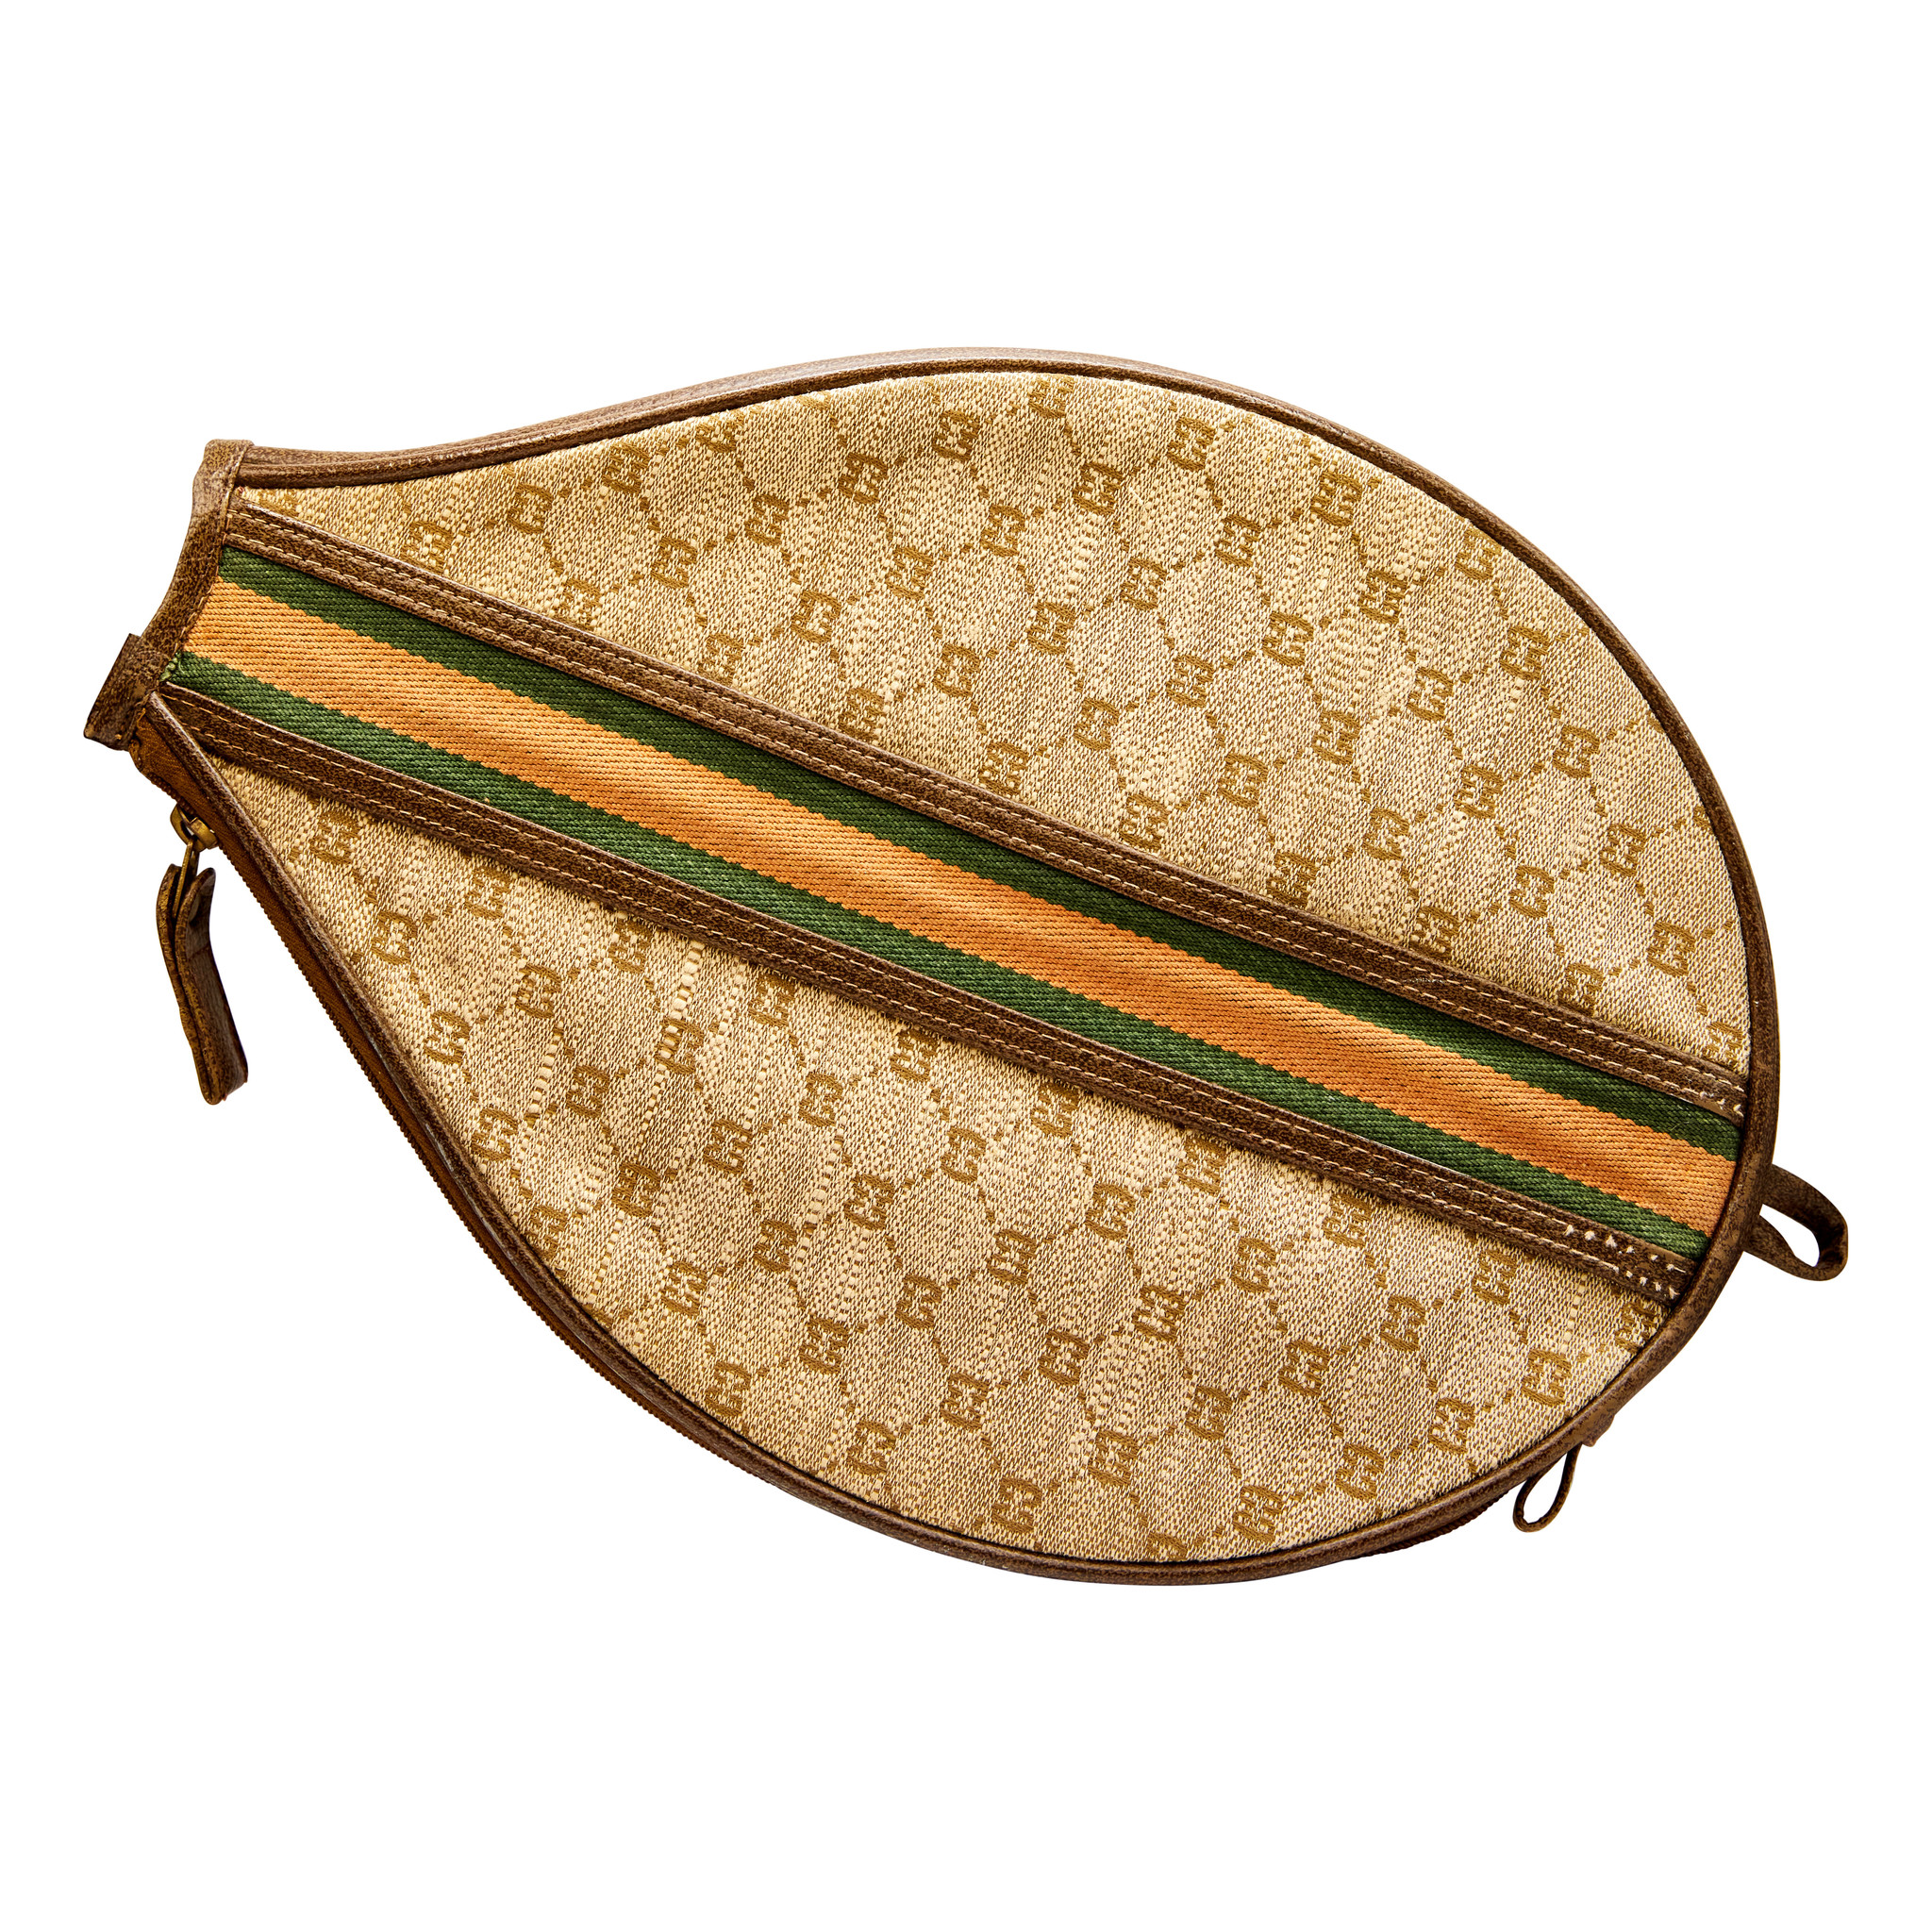 Sold at Auction: Gucci (bag); Dunlop (racquet), Gucci GG Web Tennis Bag &  Vintage Dunlop Racquet